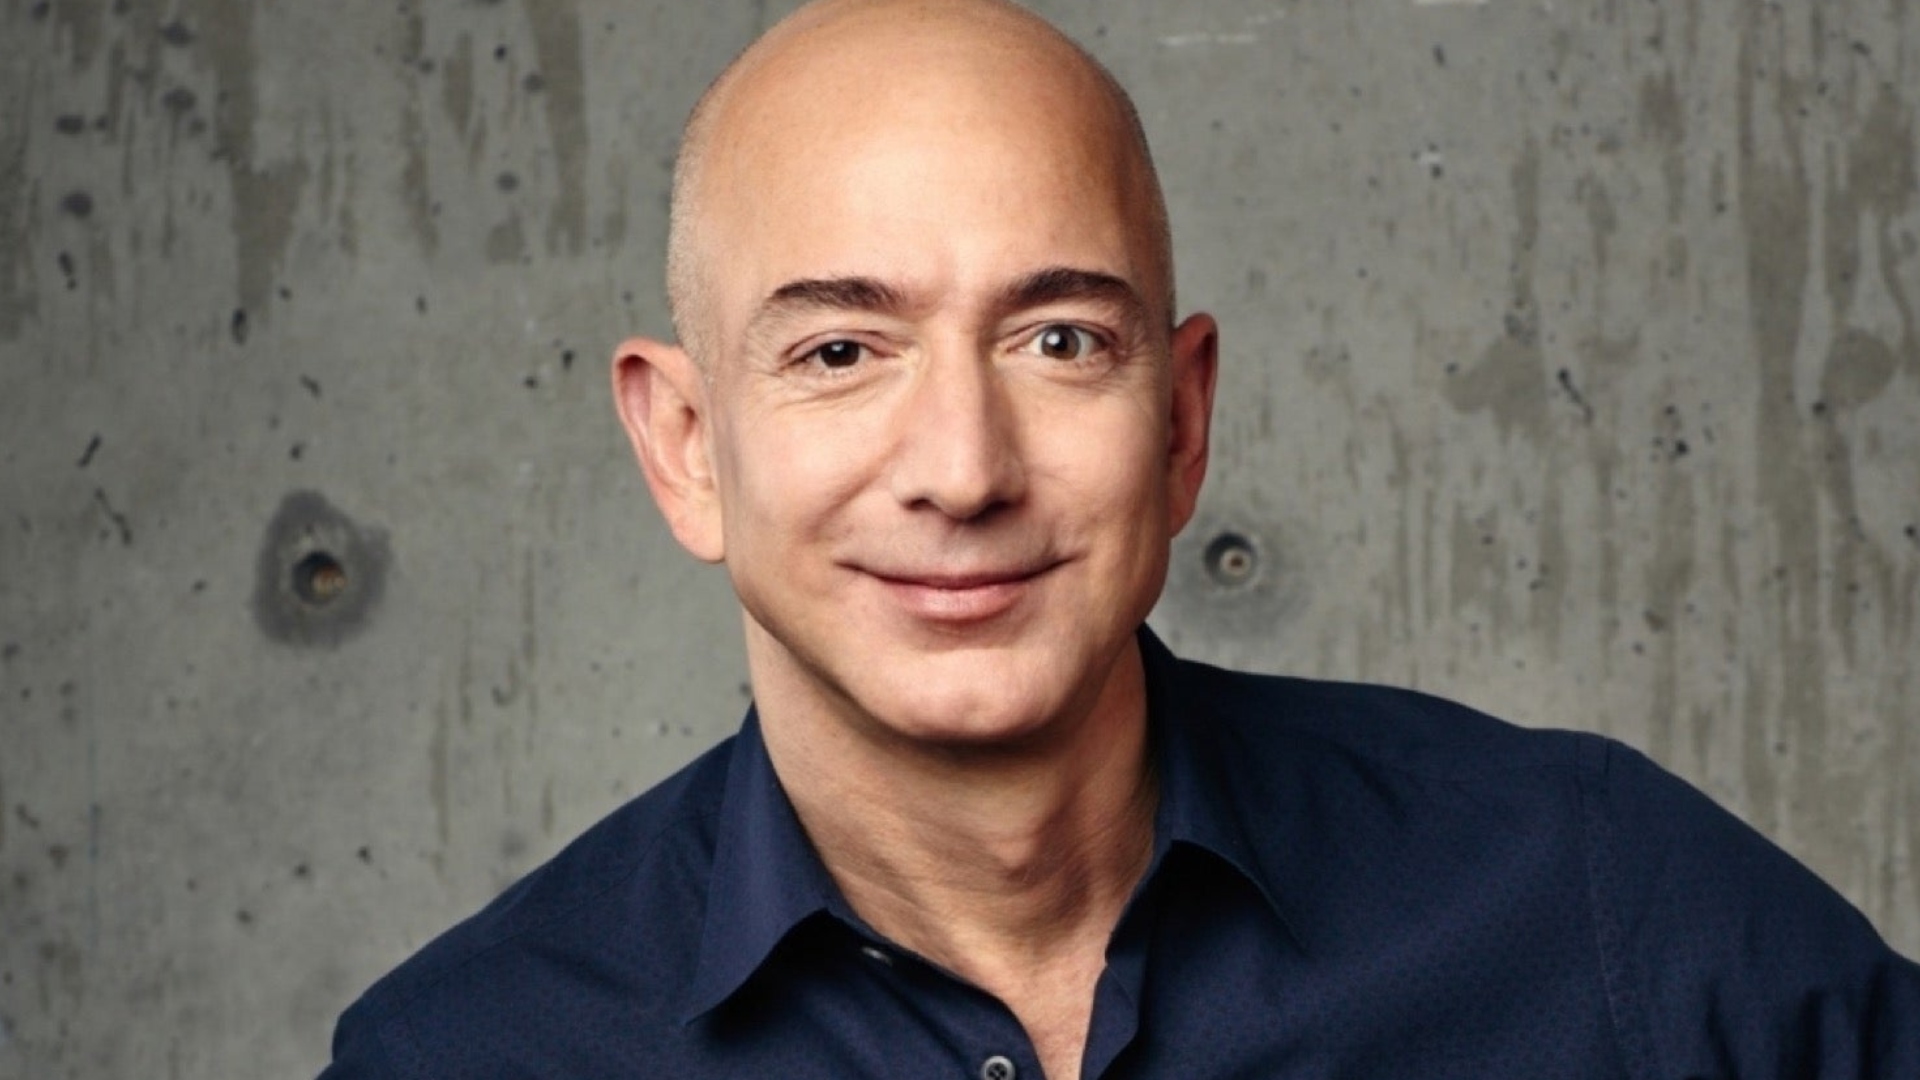 Jeff Bezos, Amazon’s founder, will step down as CEO | LaptrinhX / News